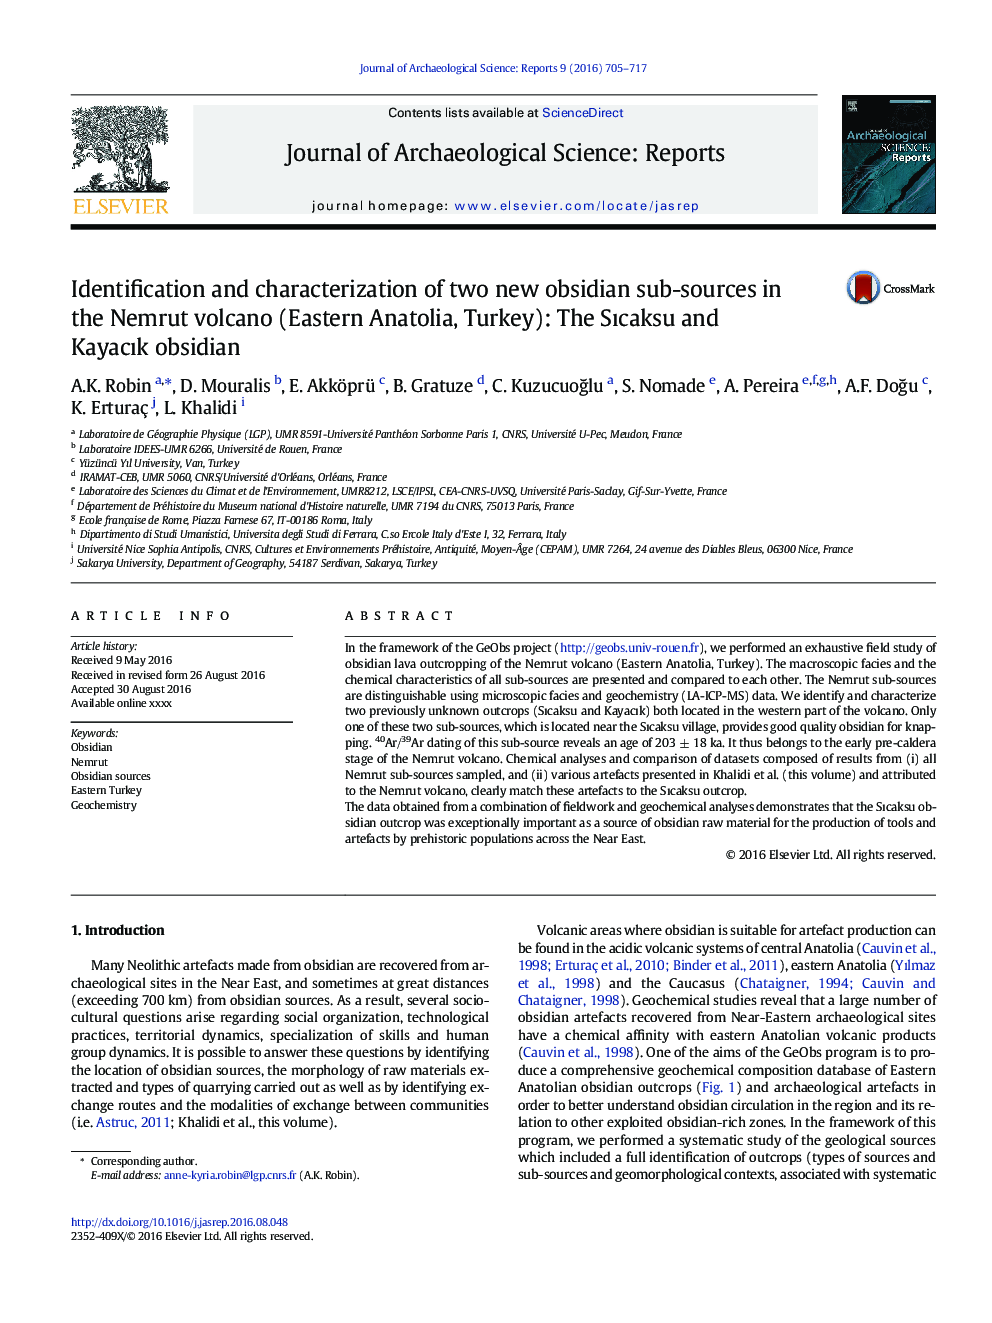 Identification and characterization of two new obsidian sub-sources in the Nemrut volcano (Eastern Anatolia, Turkey): The SÄ±caksu and KayacÄ±k obsidian